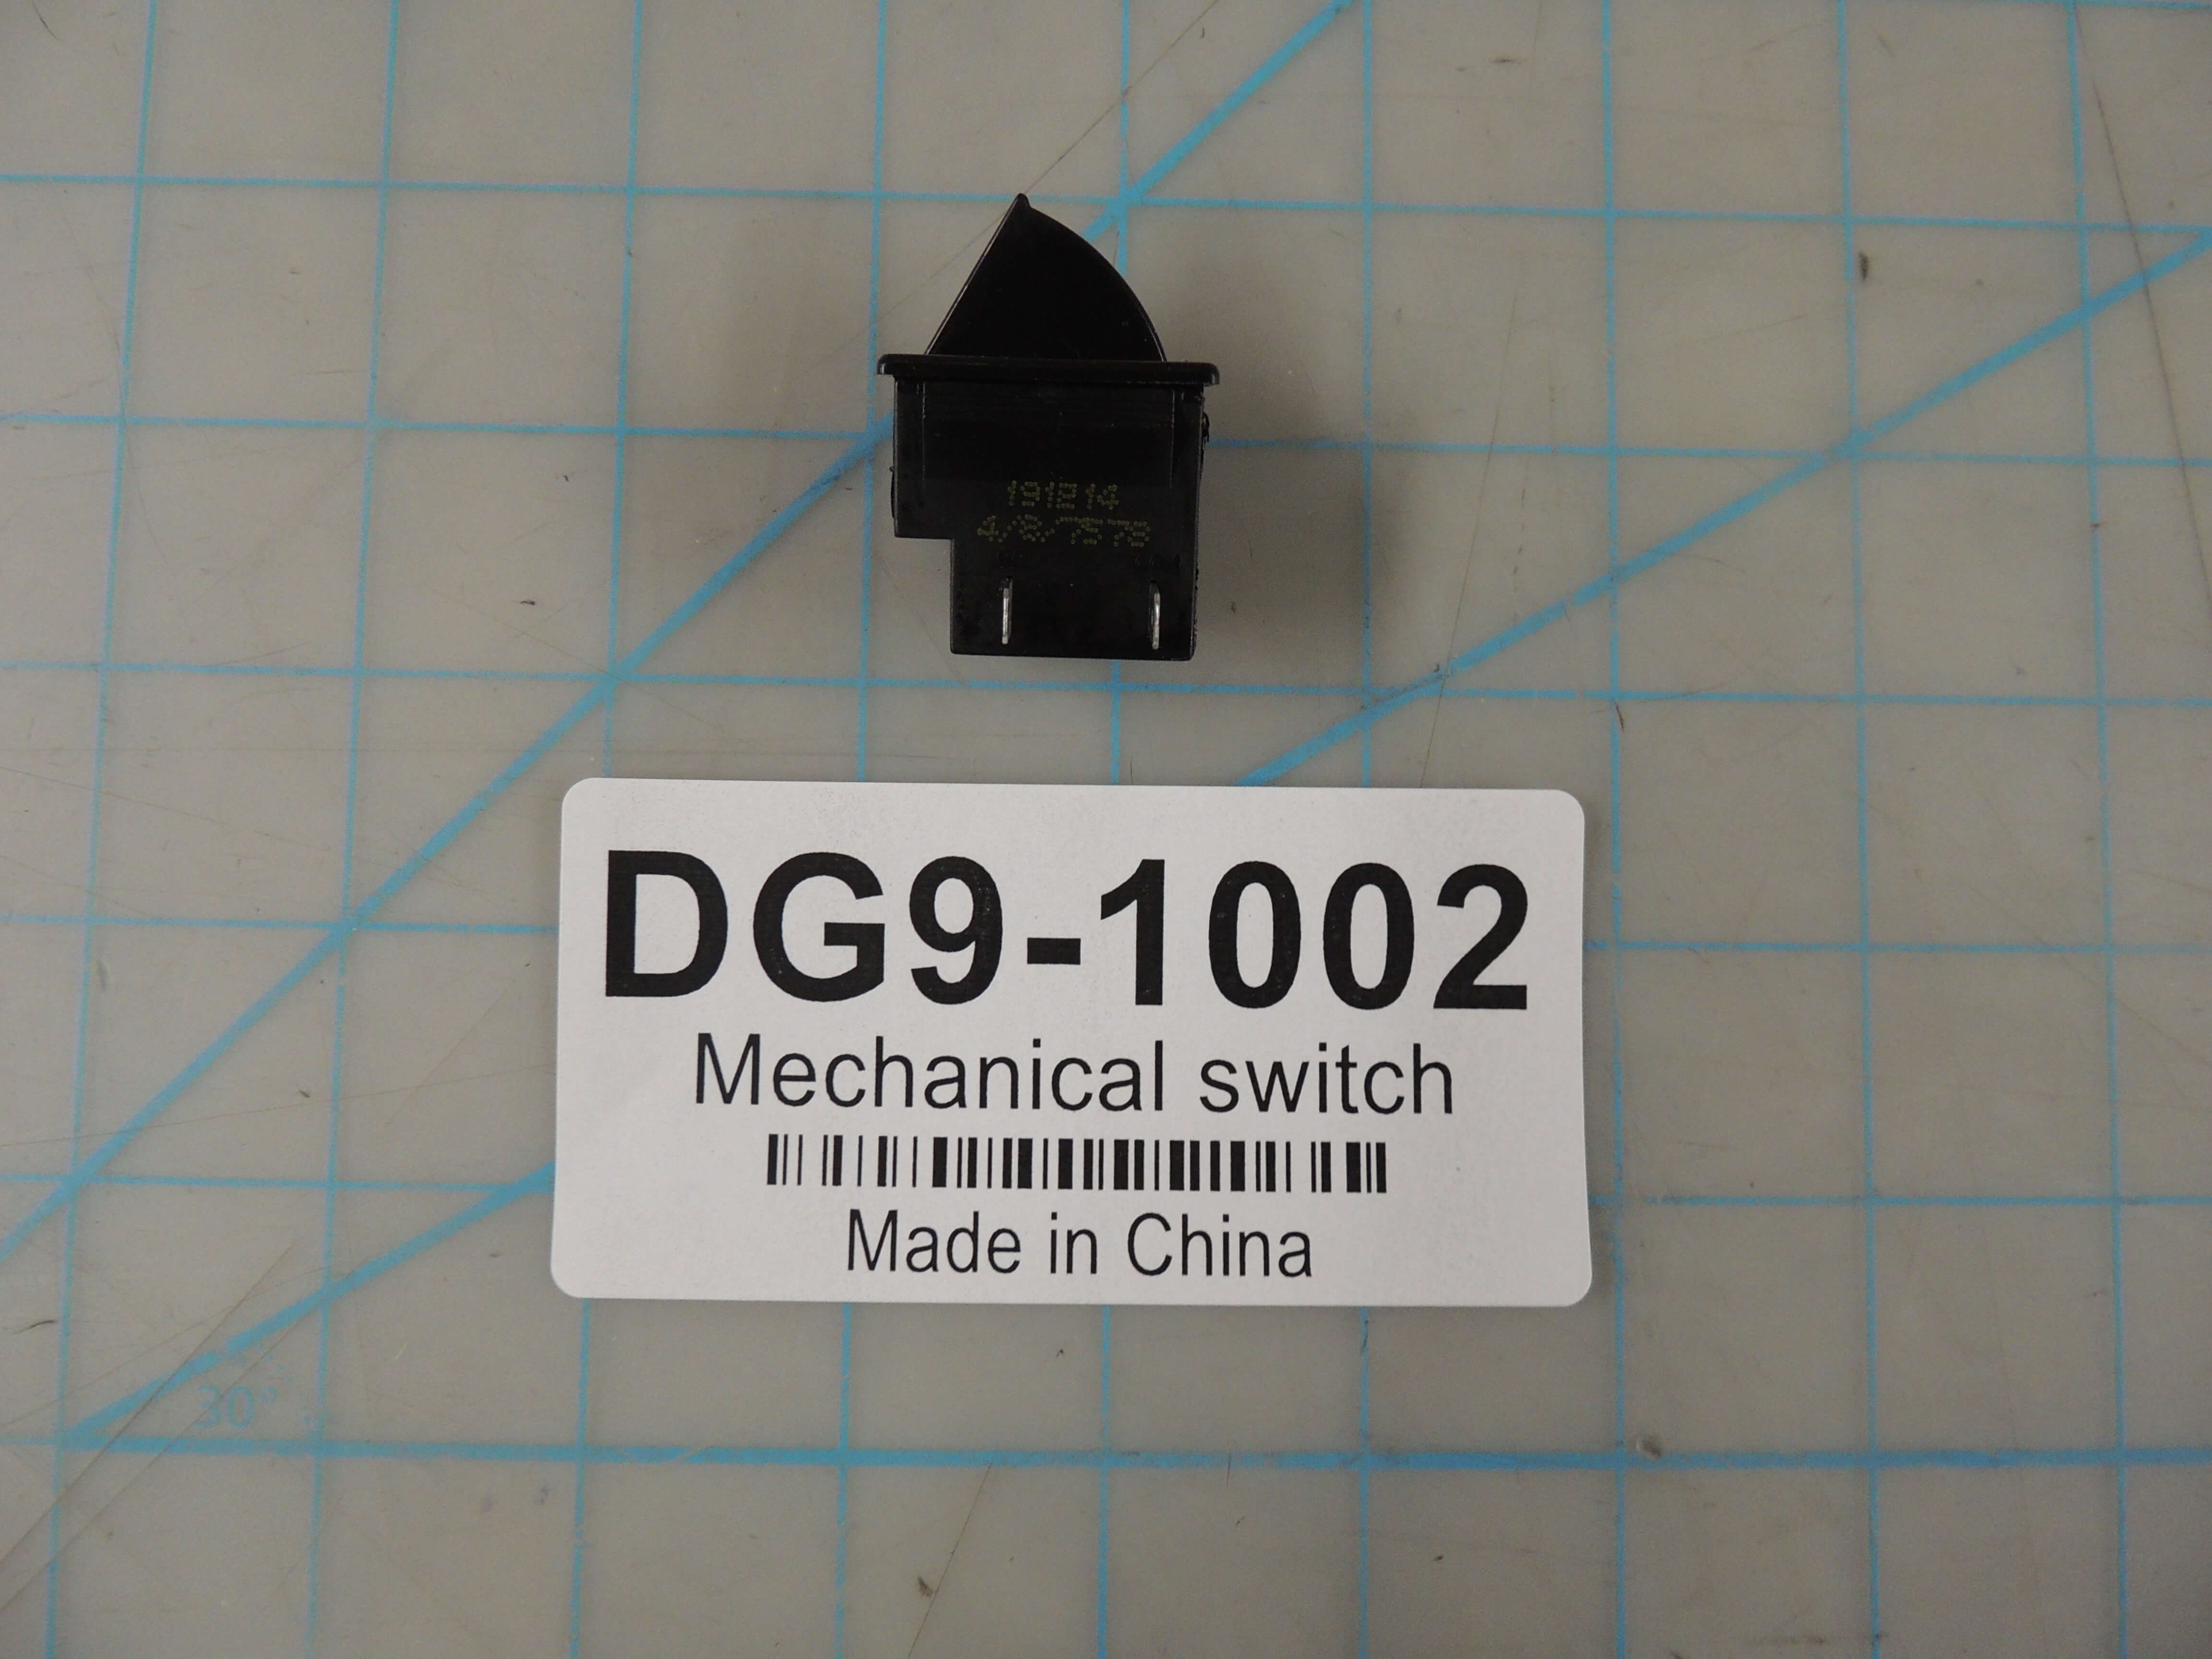 Mechanical switch